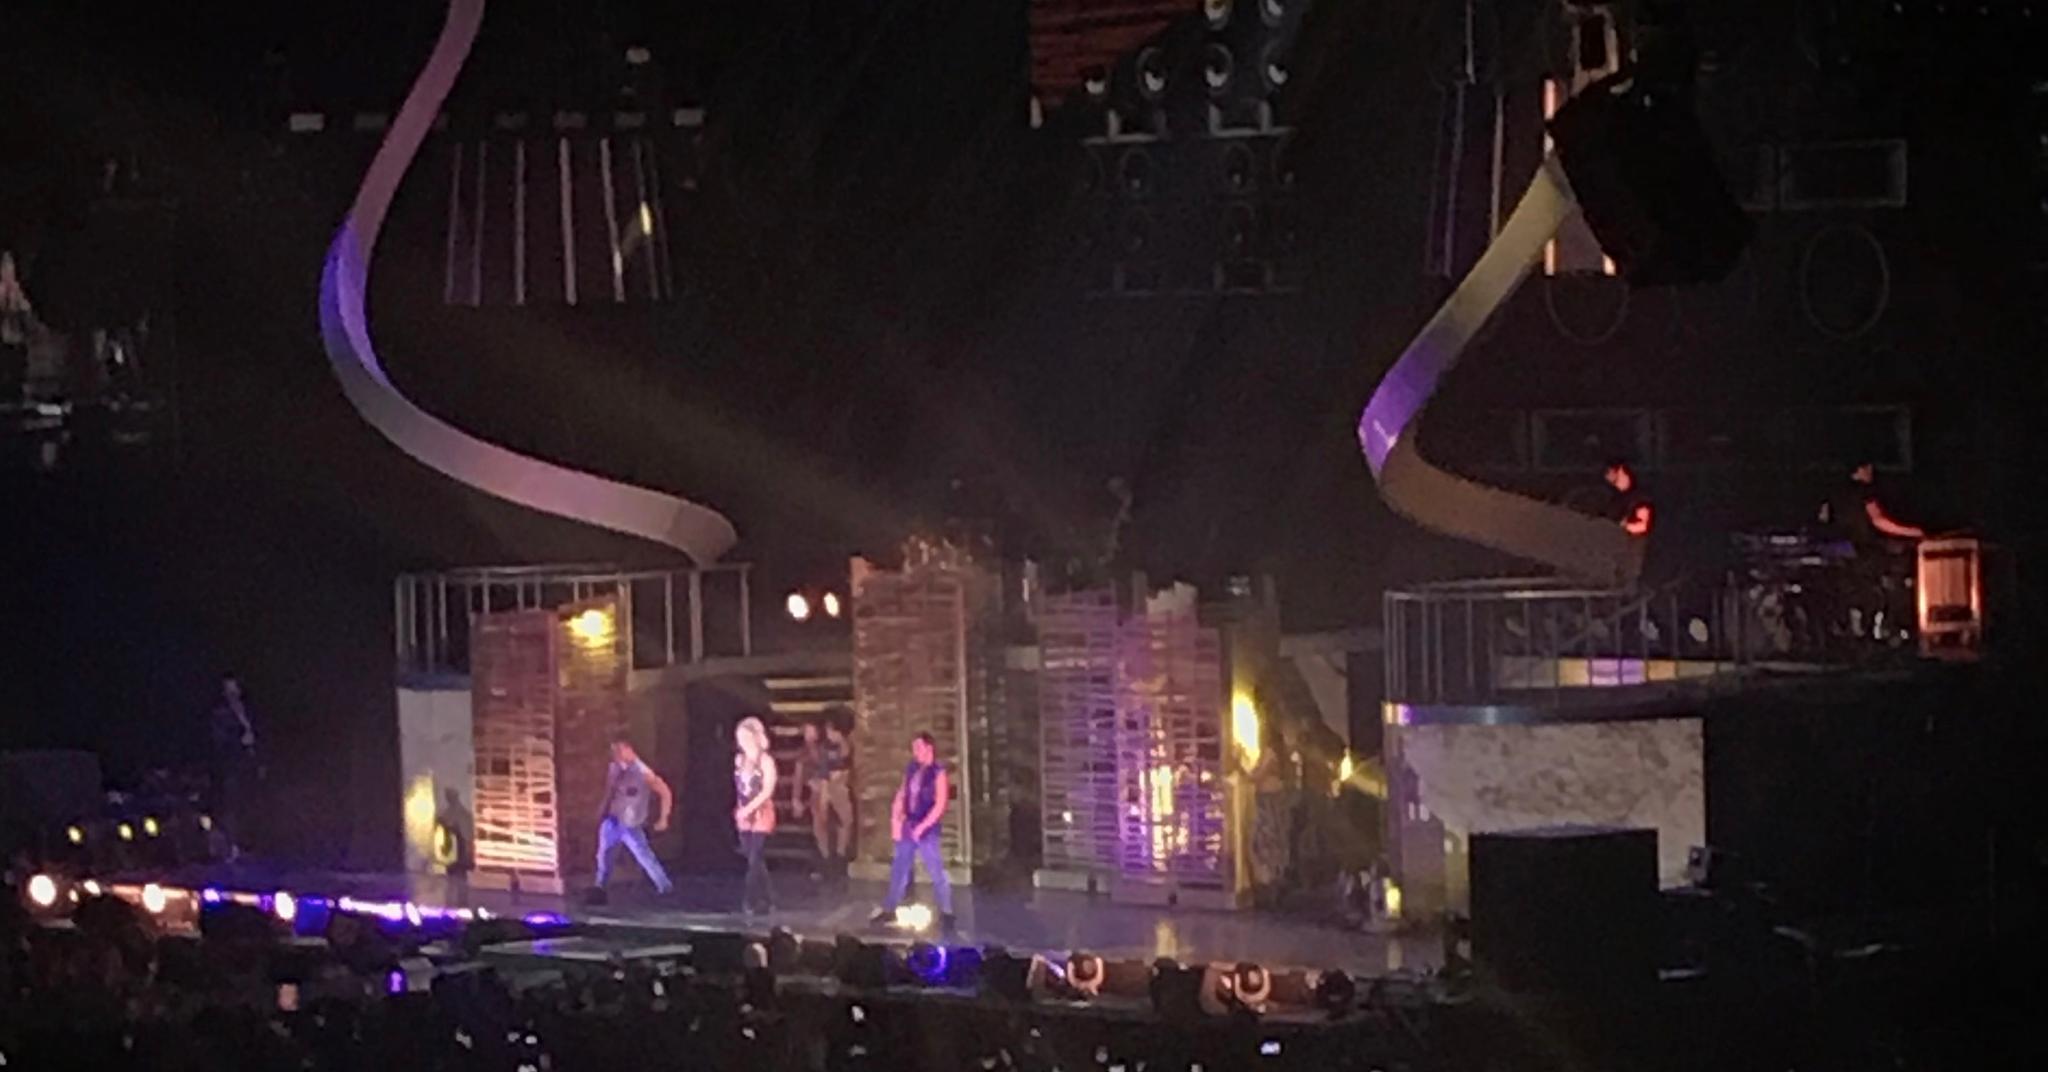 Langt der nede på scenen i Telenor Arena står Britney Spears. Det ble et skuffende show med henne på besøk.